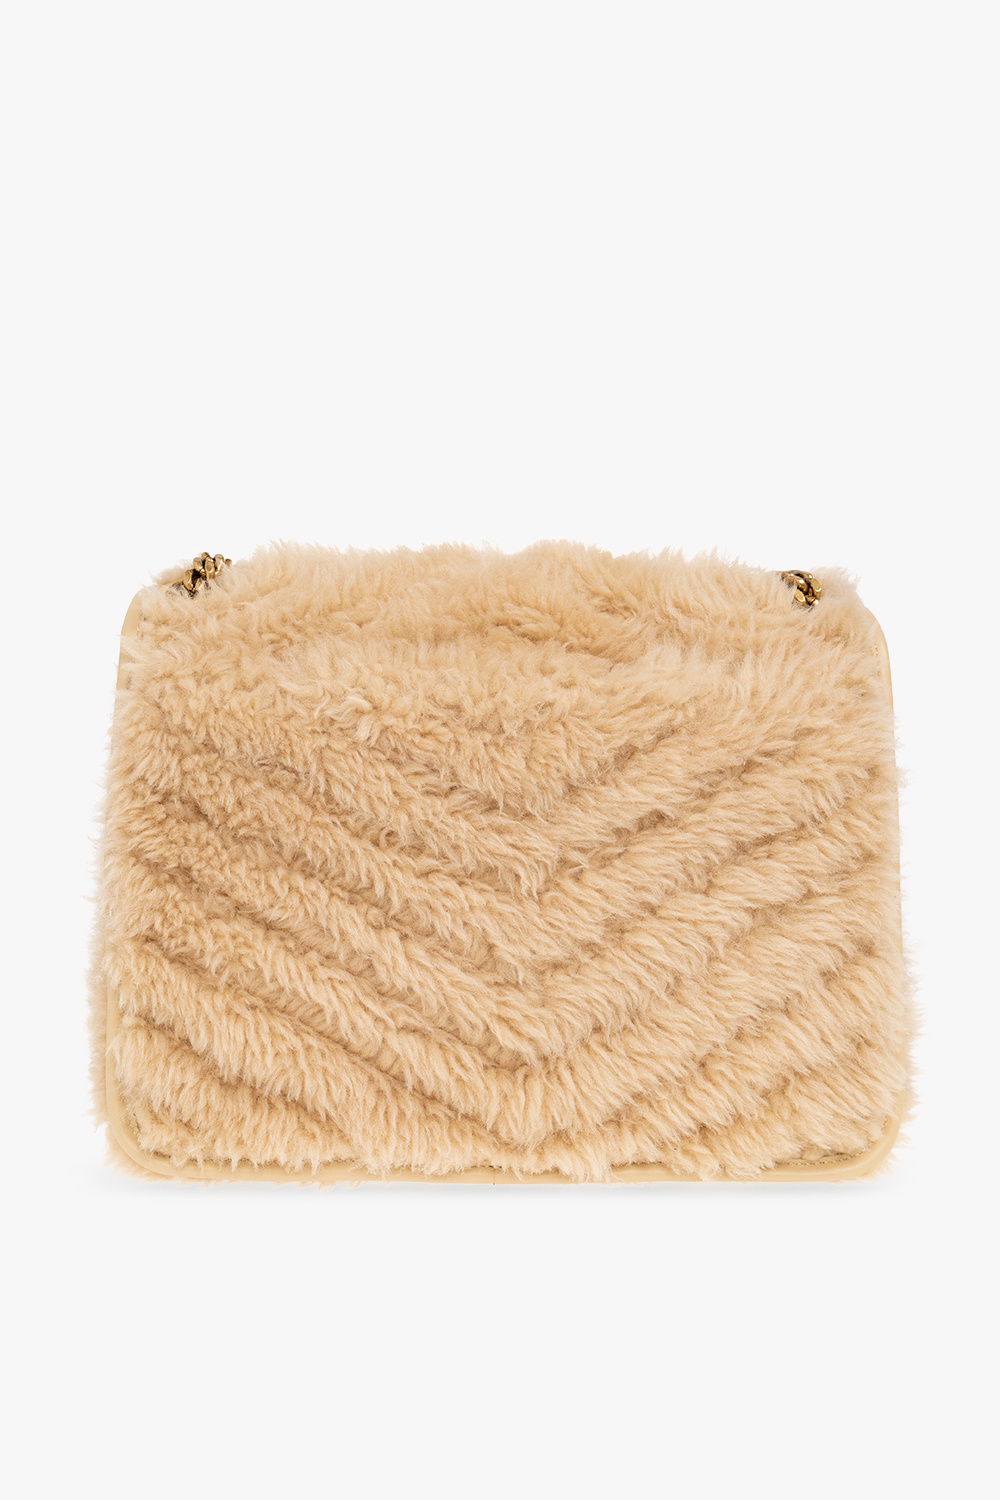 Saint Laurent ‘Niki Medium’ fur shoulder bag